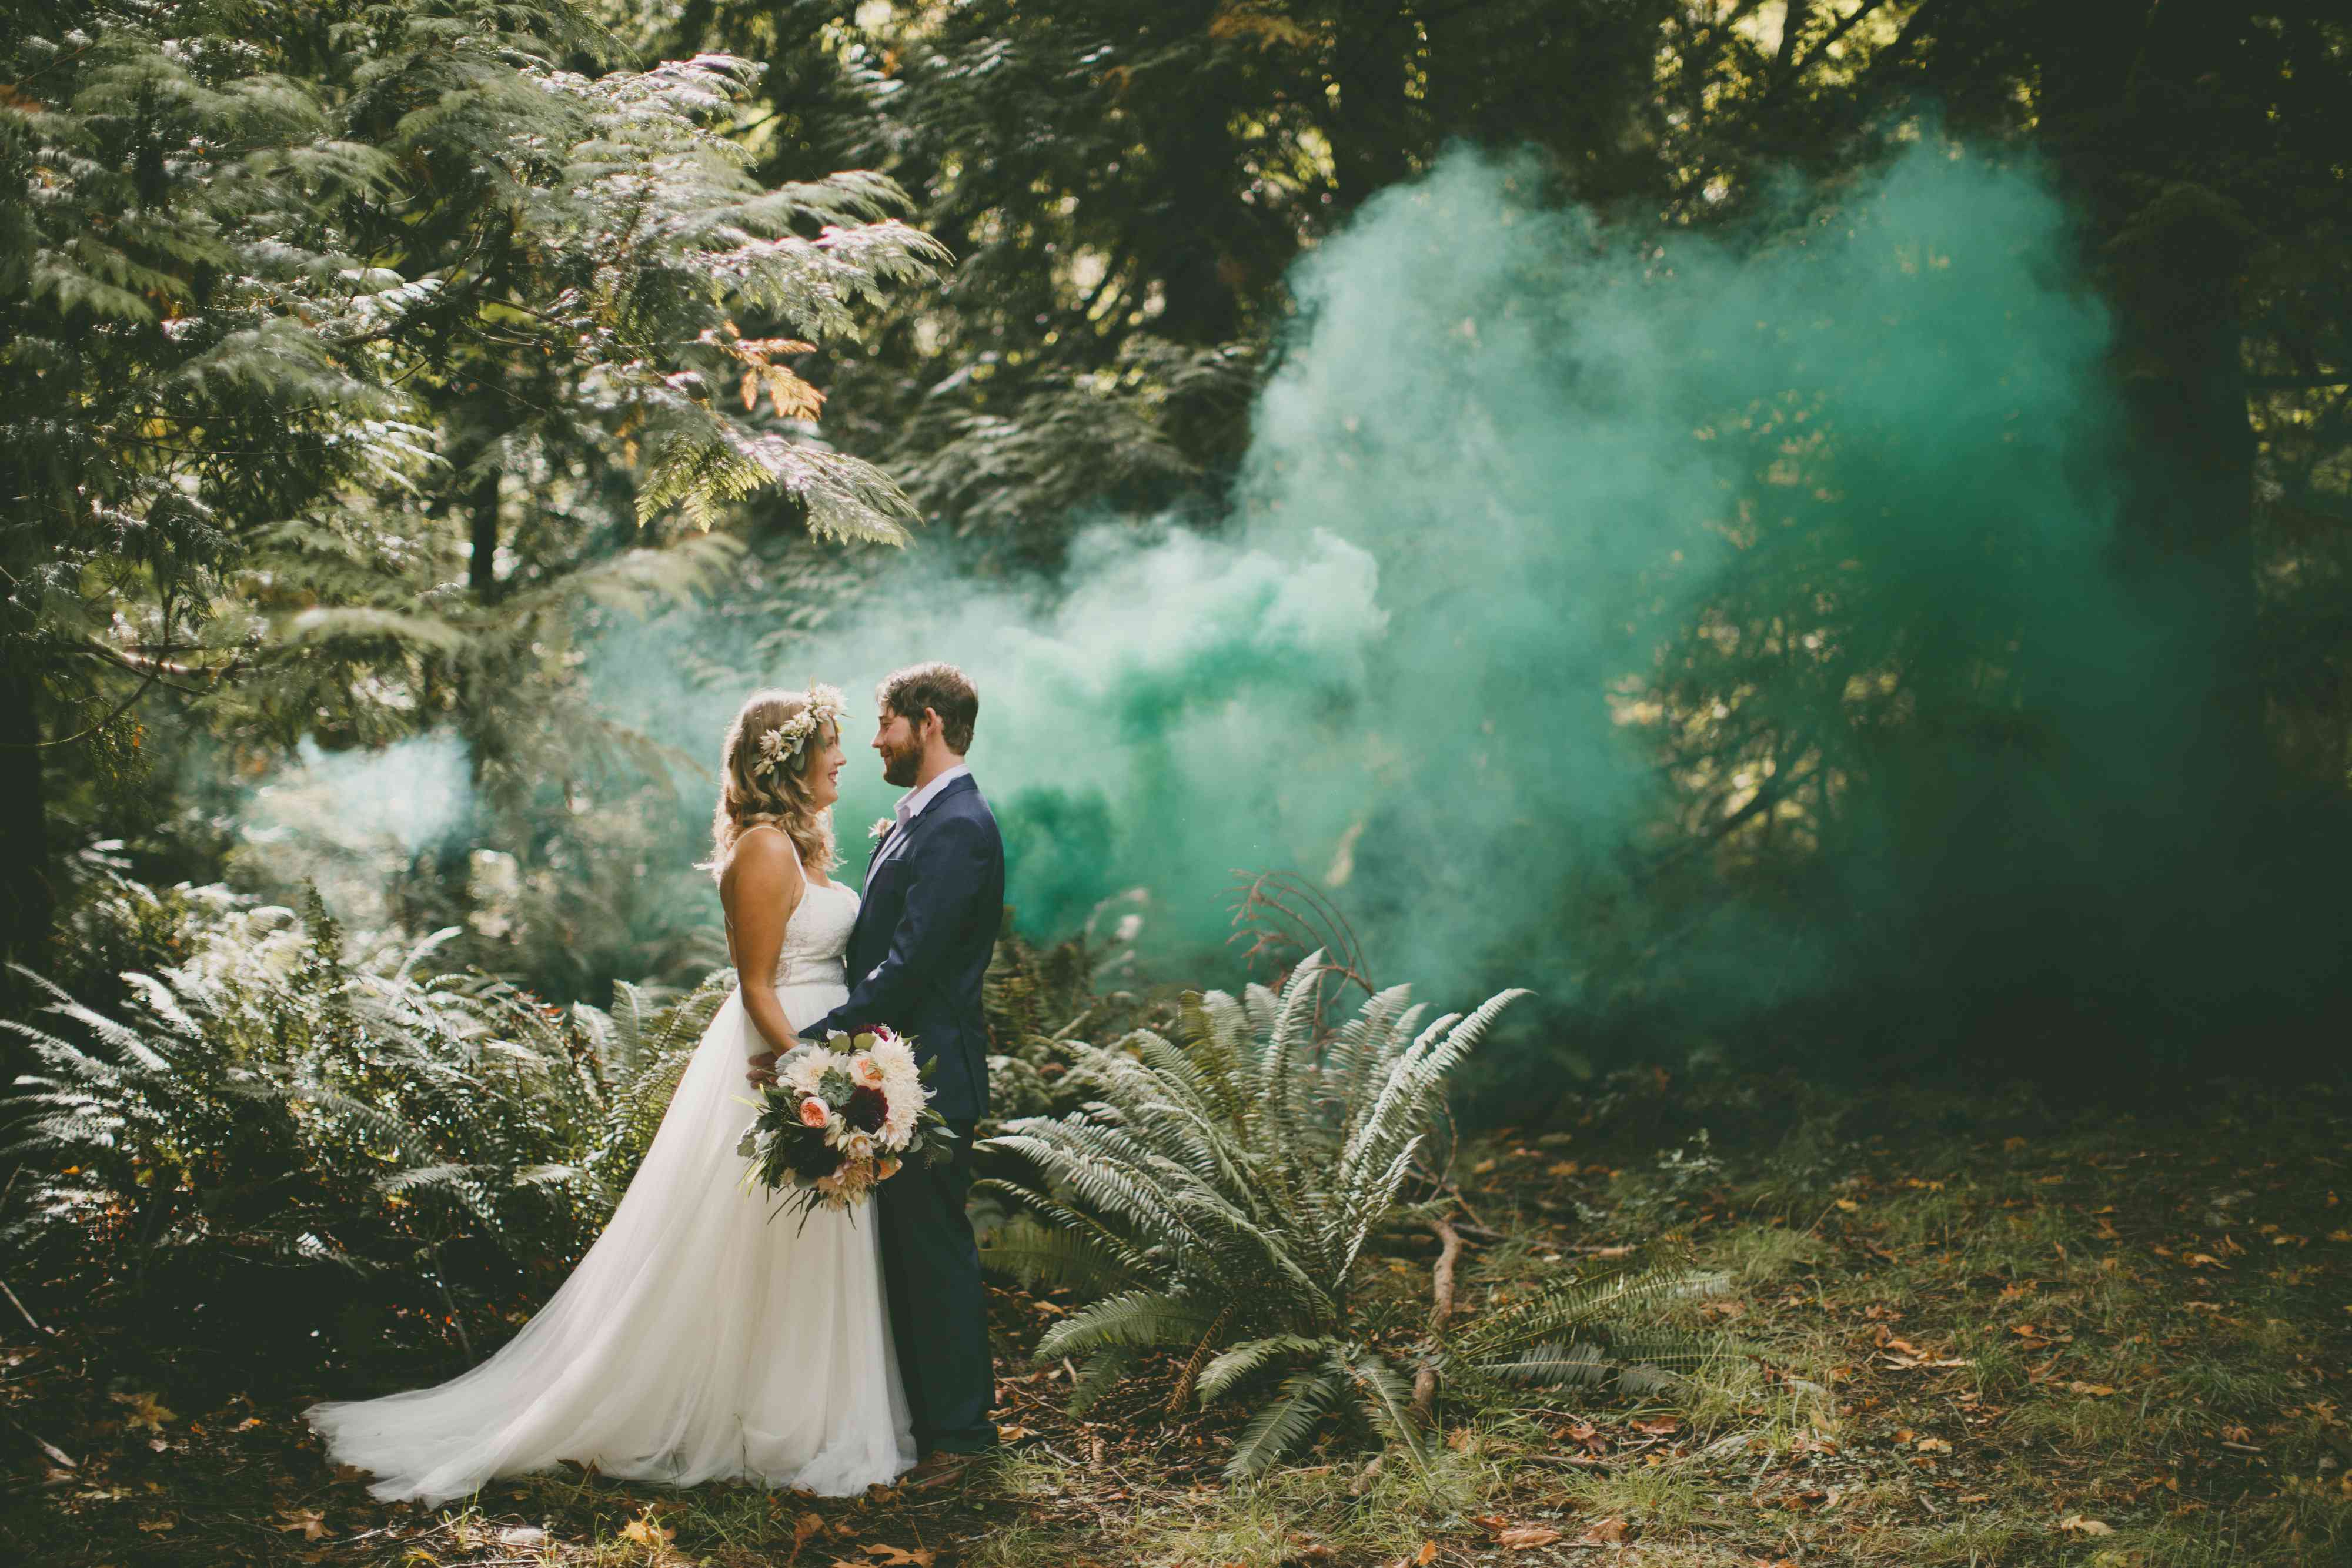 Wedding Color Smoke Bombs in Green